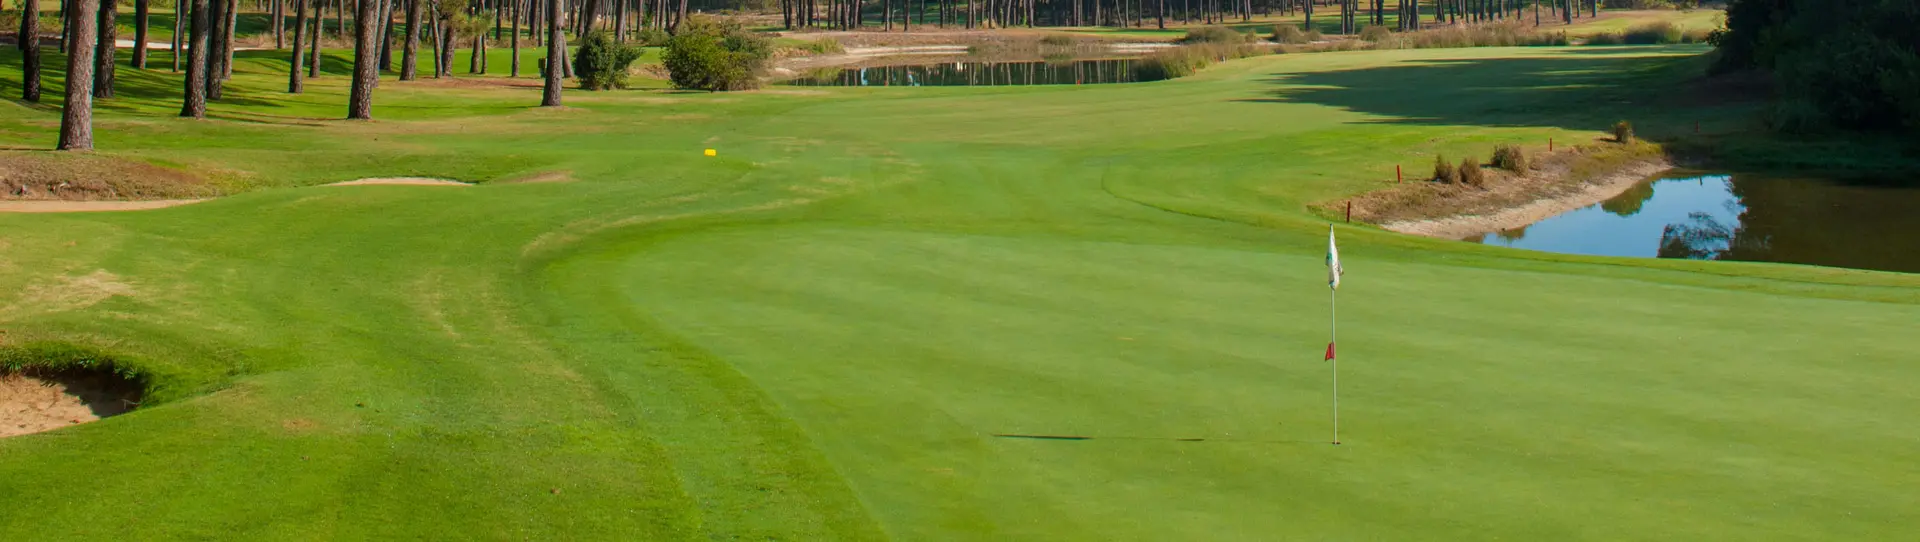 Portugal golf courses - Aroeira Challenge Golf Course (ex Aroeira II)  - Photo 2